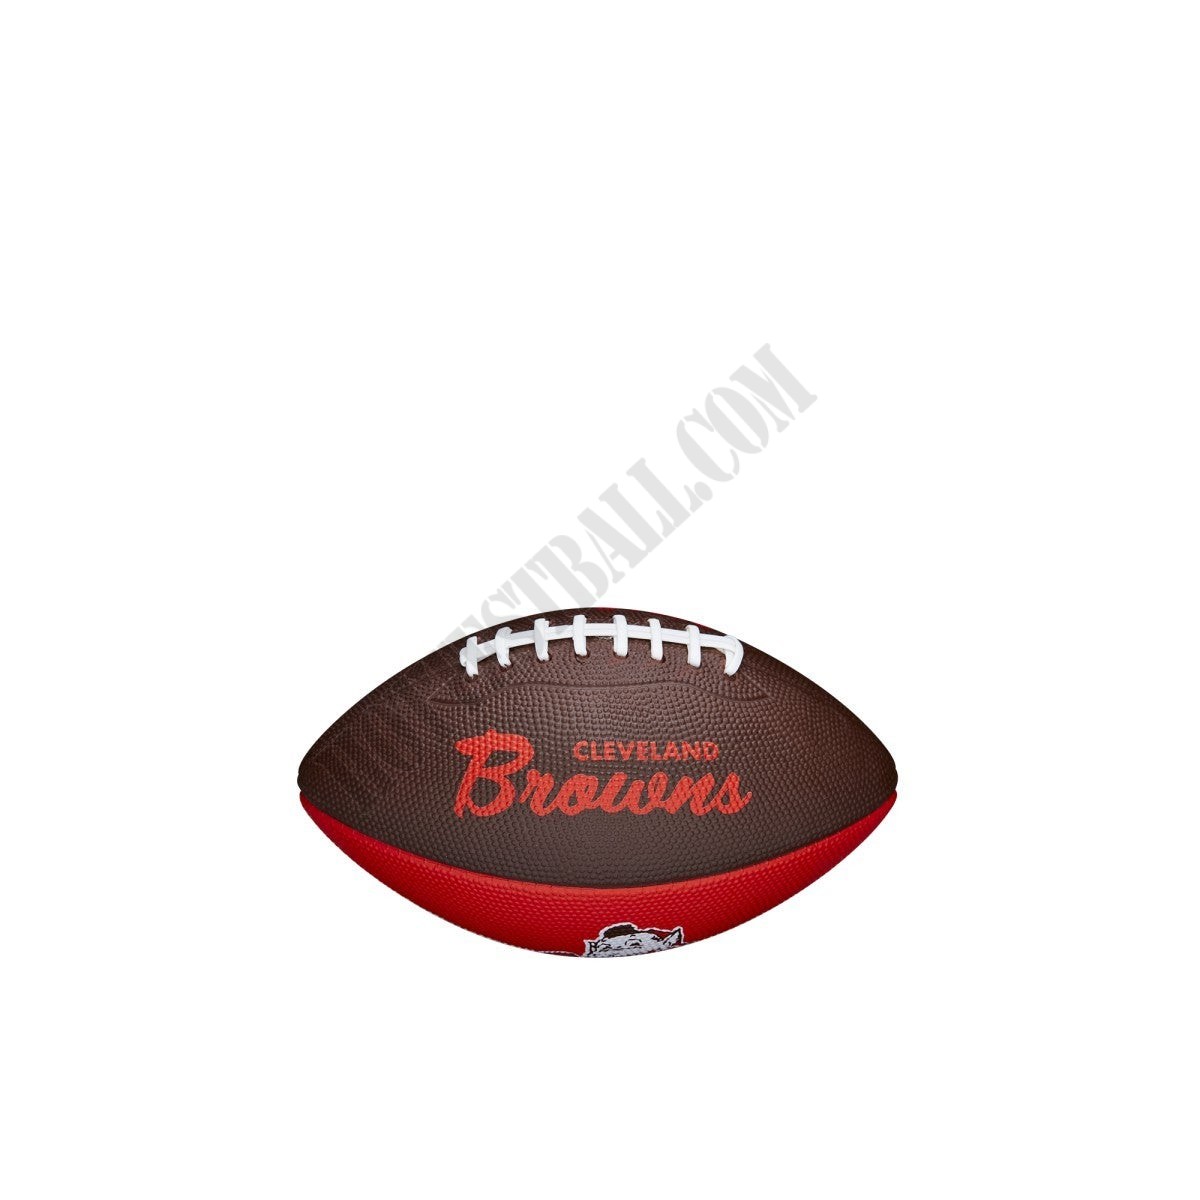 NFL Retro Mini Football - Cleveland Browns ● Wilson Promotions - NFL Retro Mini Football - Cleveland Browns ● Wilson Promotions